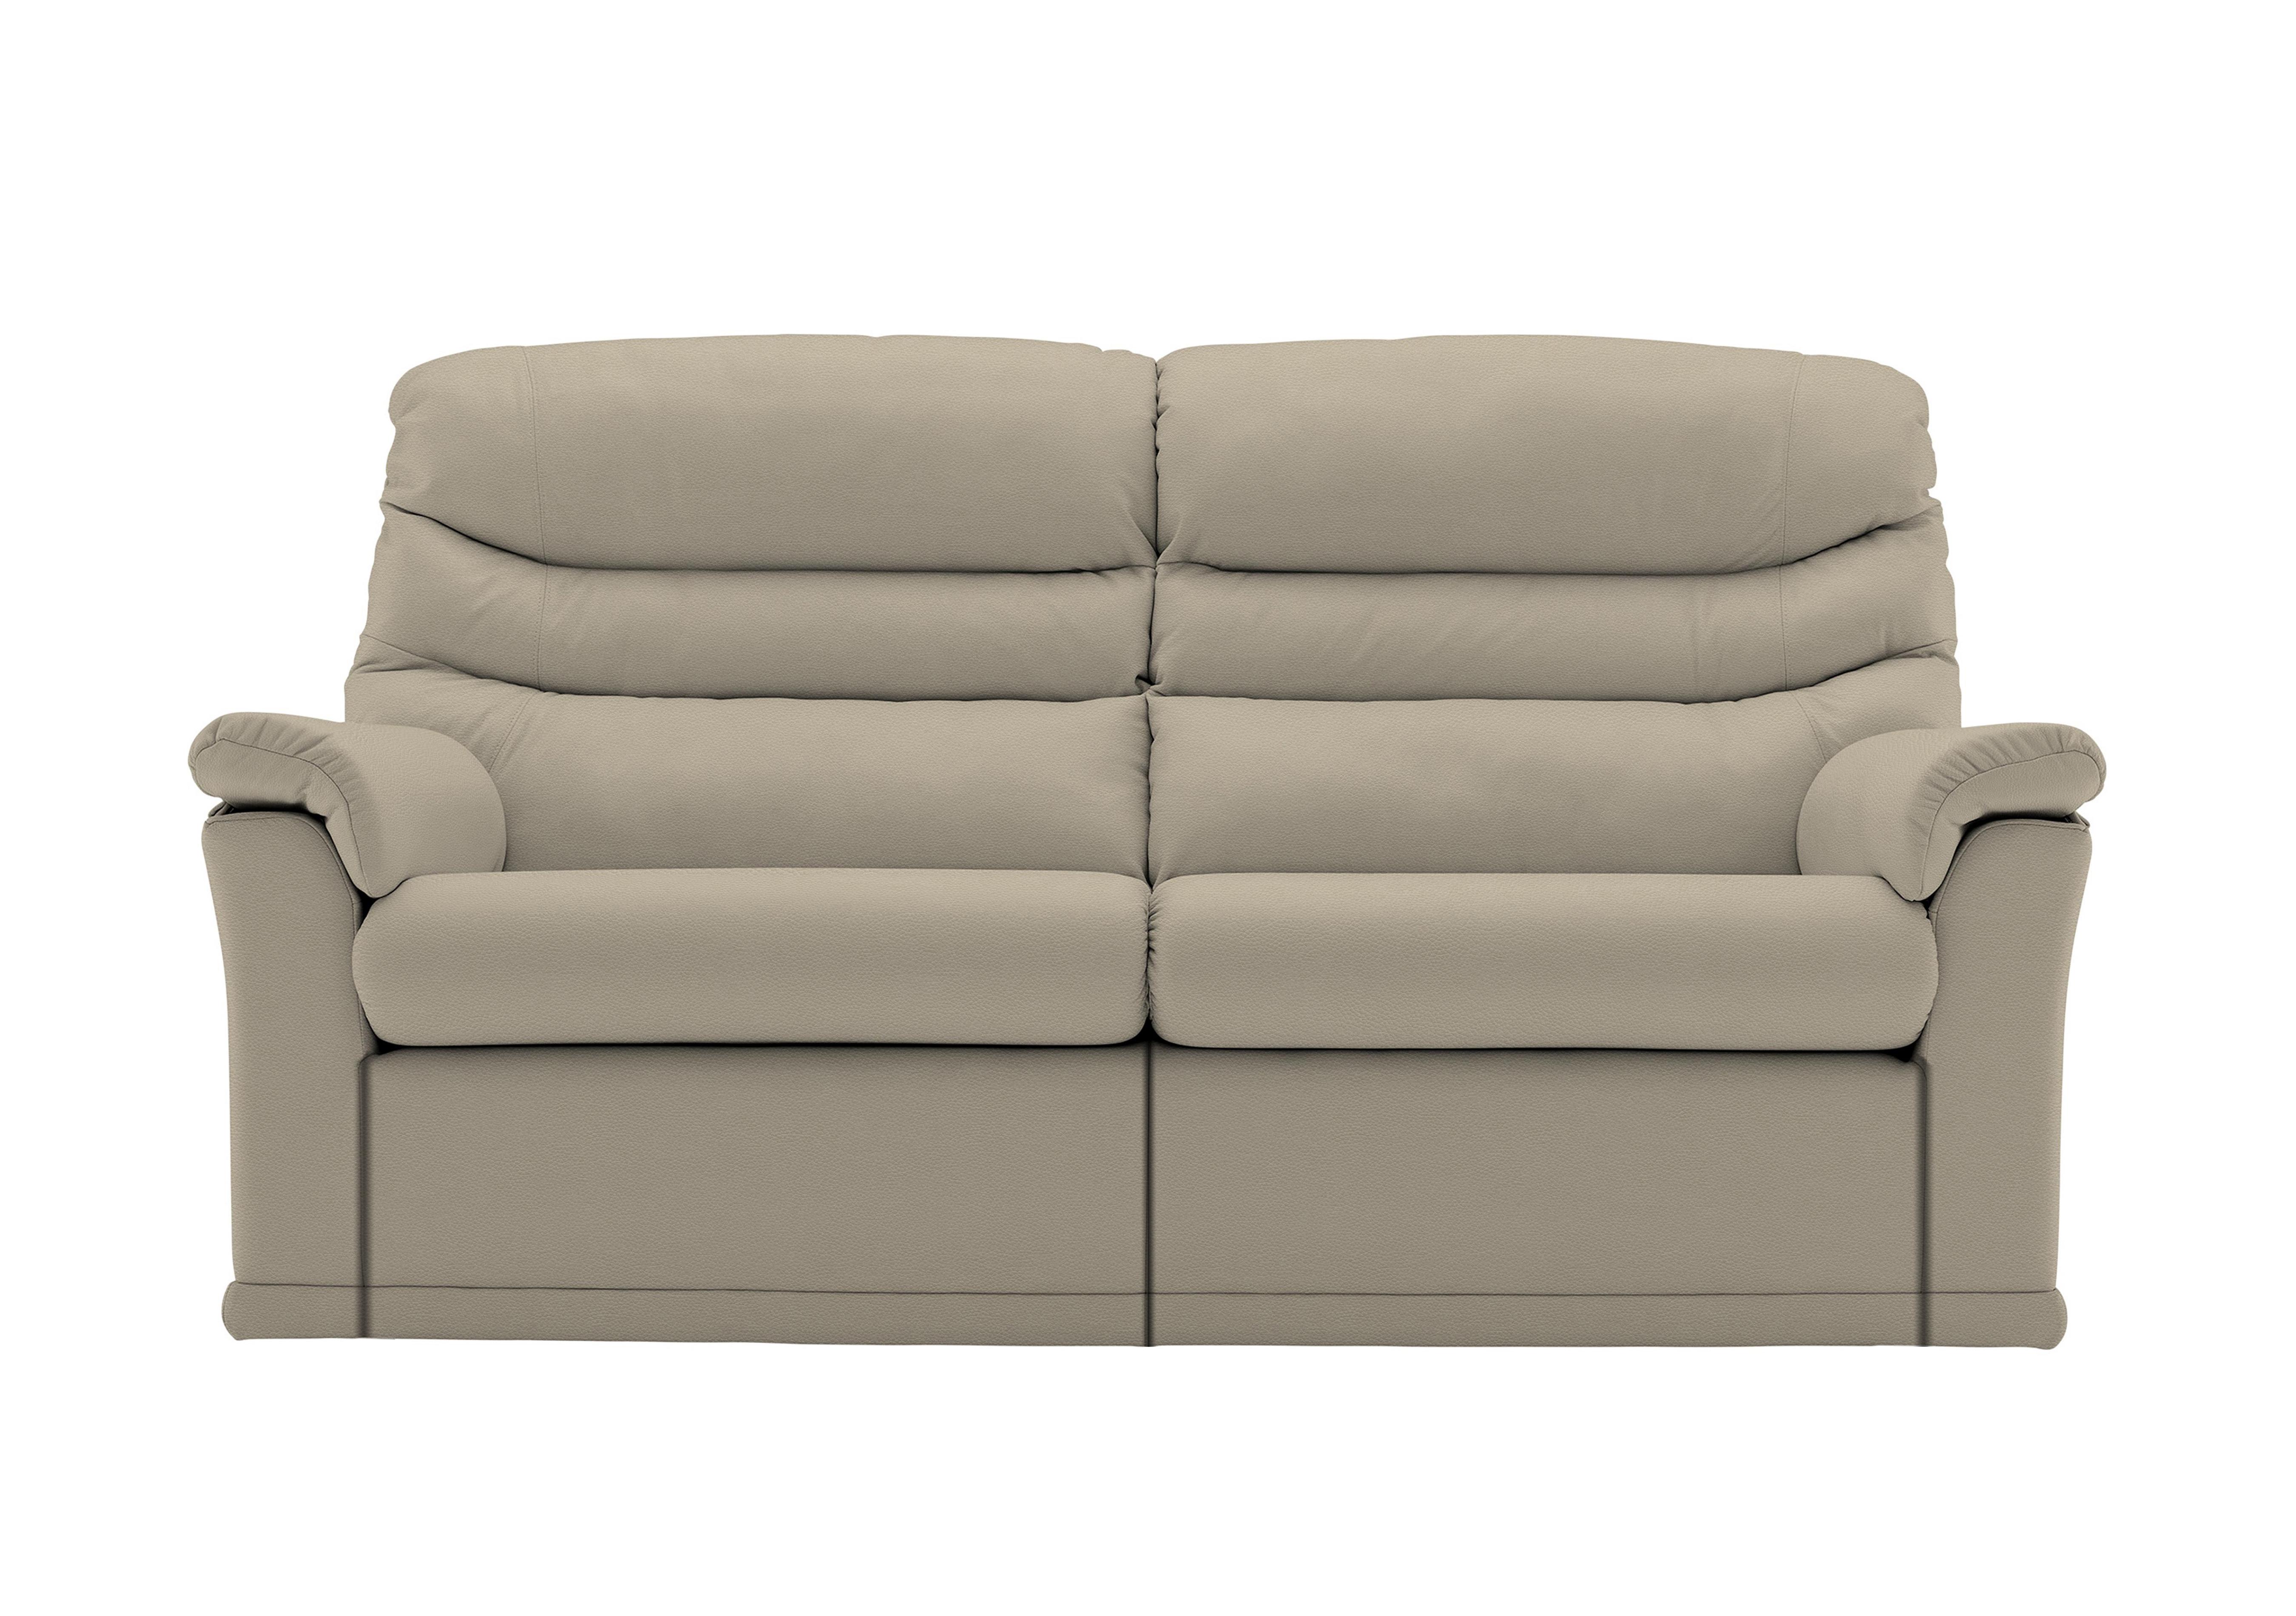 Malvern 2 Cushion 3 Seater Leather Sofa in H001 Oxford Mushroom on Furniture Village